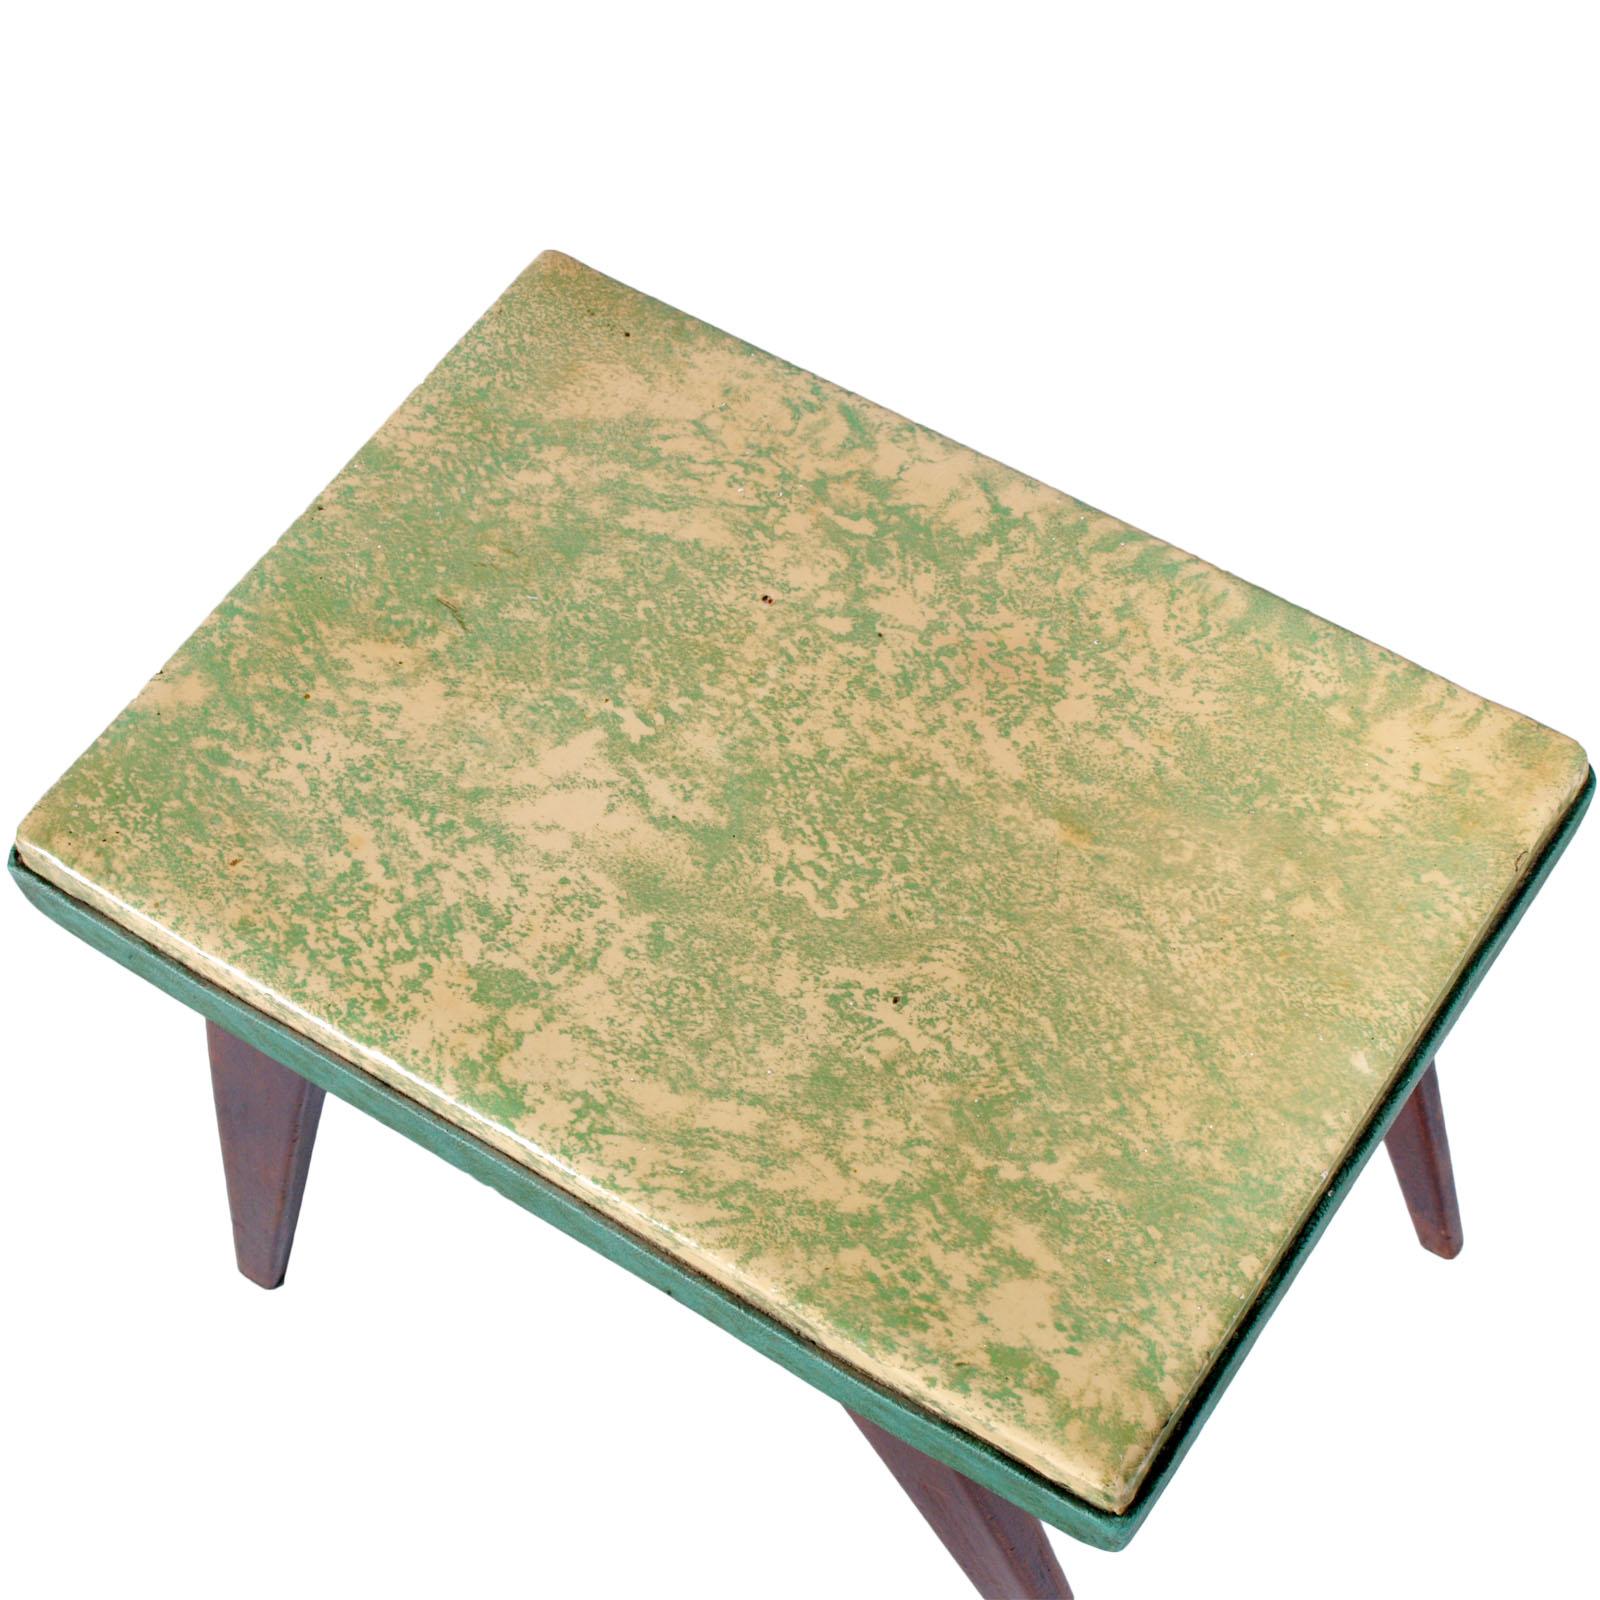 Tan France Auction Pick

Midcentury Art Deco stool, walnut, plasticized printed fabric, Gio Ponti attributed.

Measures cm: H 37, W 44, D 32.